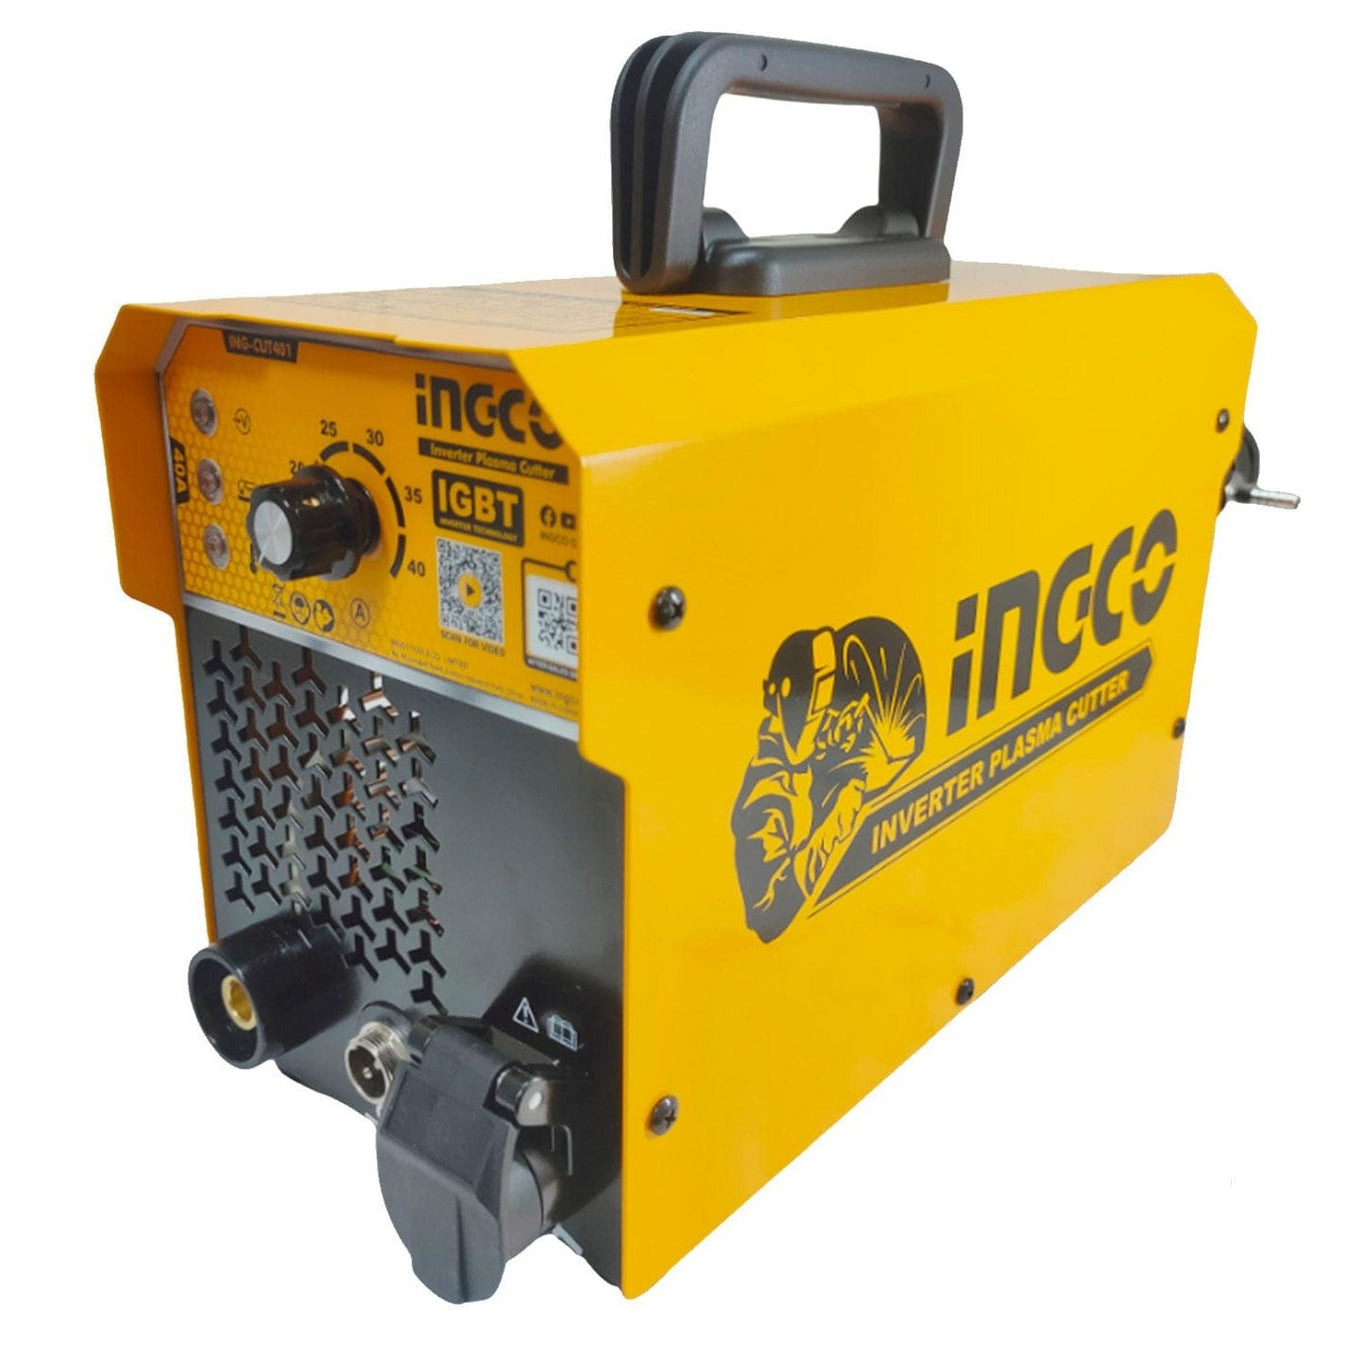 Ingco Inverter MMA Welding Machine 160 AMP - ING-MMA16028 | Supply Master Accra, Ghana Welding Machine & Accessories Buy Tools hardware Building materials